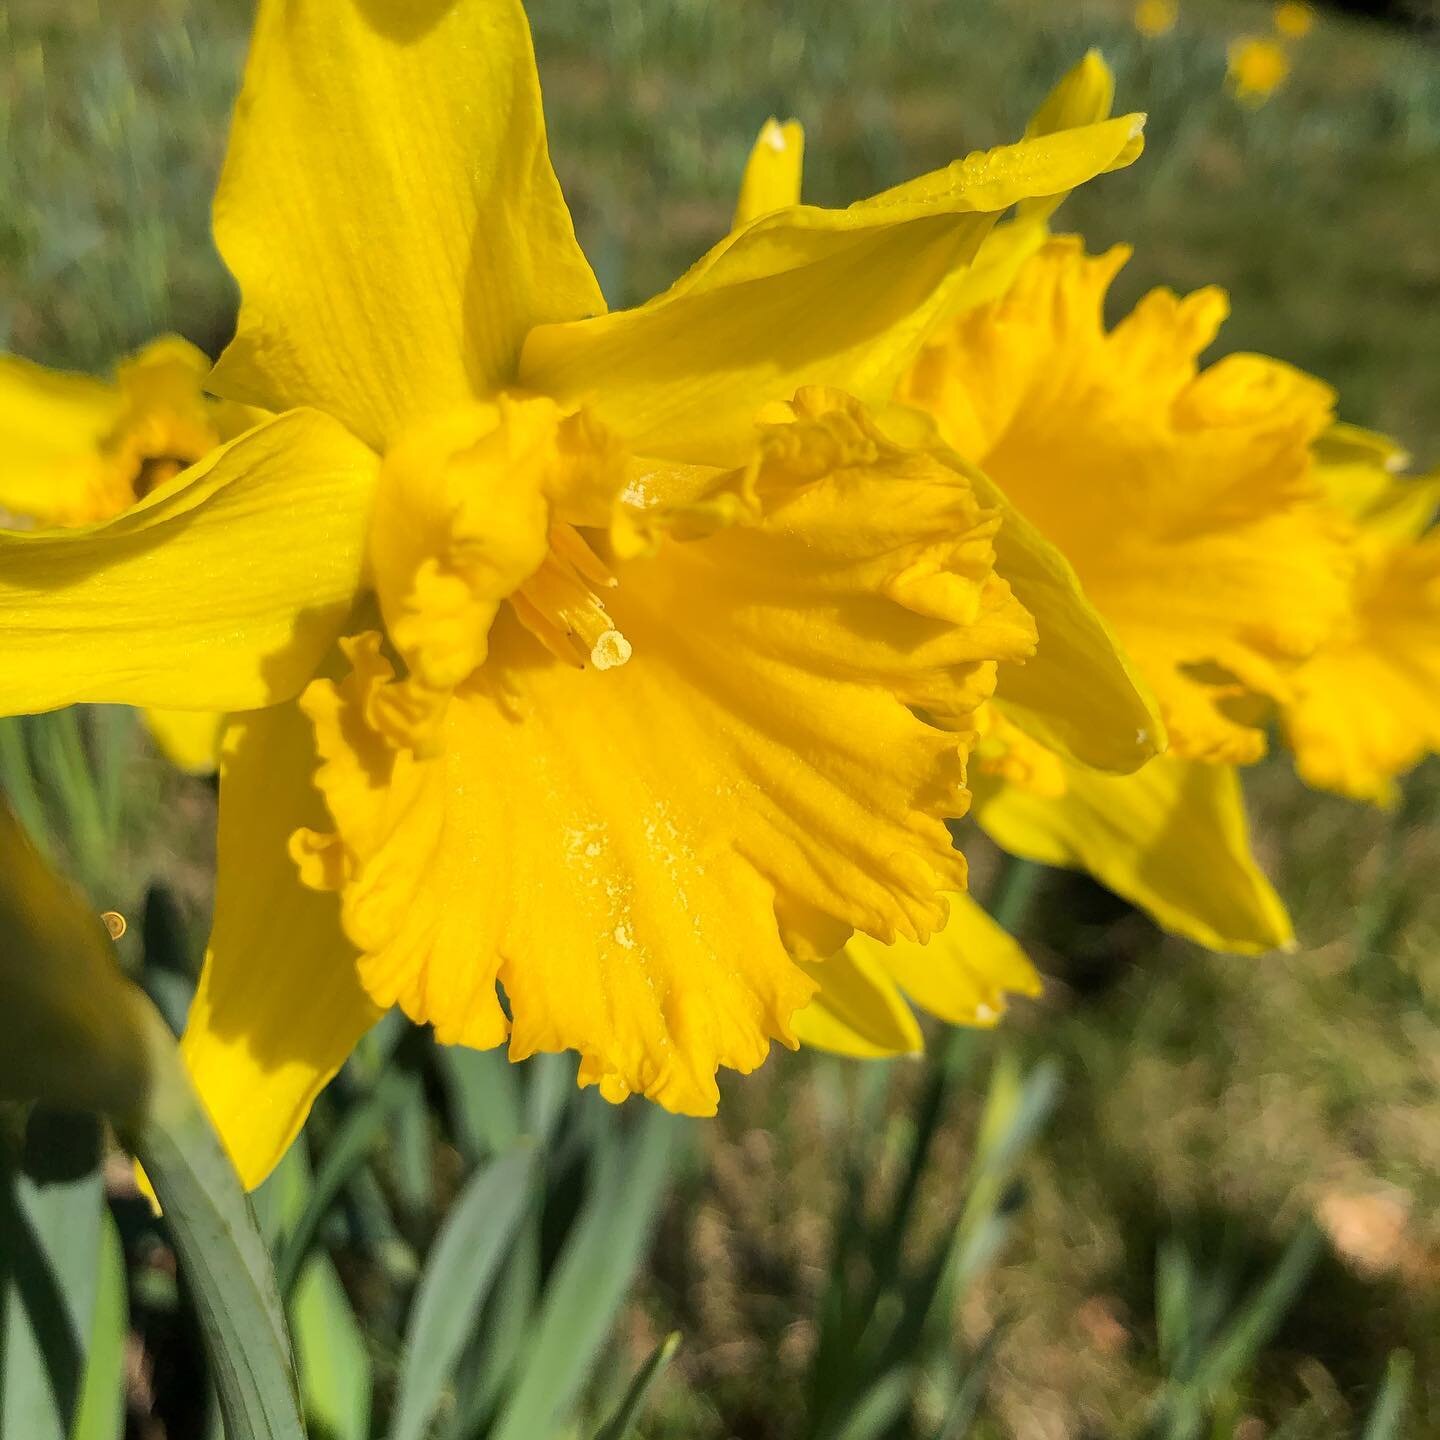 #dyddgŵyldewihapus Happy St David&rsquo;s Day! Spring is on its way on Anglesey! 🌱☀️💖 #renew #thepowerofpositivedrinking #botanicaldrinks #nosugardrinks #soberfun #noalcoholneeded #walledgarden #secretgarden #spring2021 #jointheherbalrevolution #po